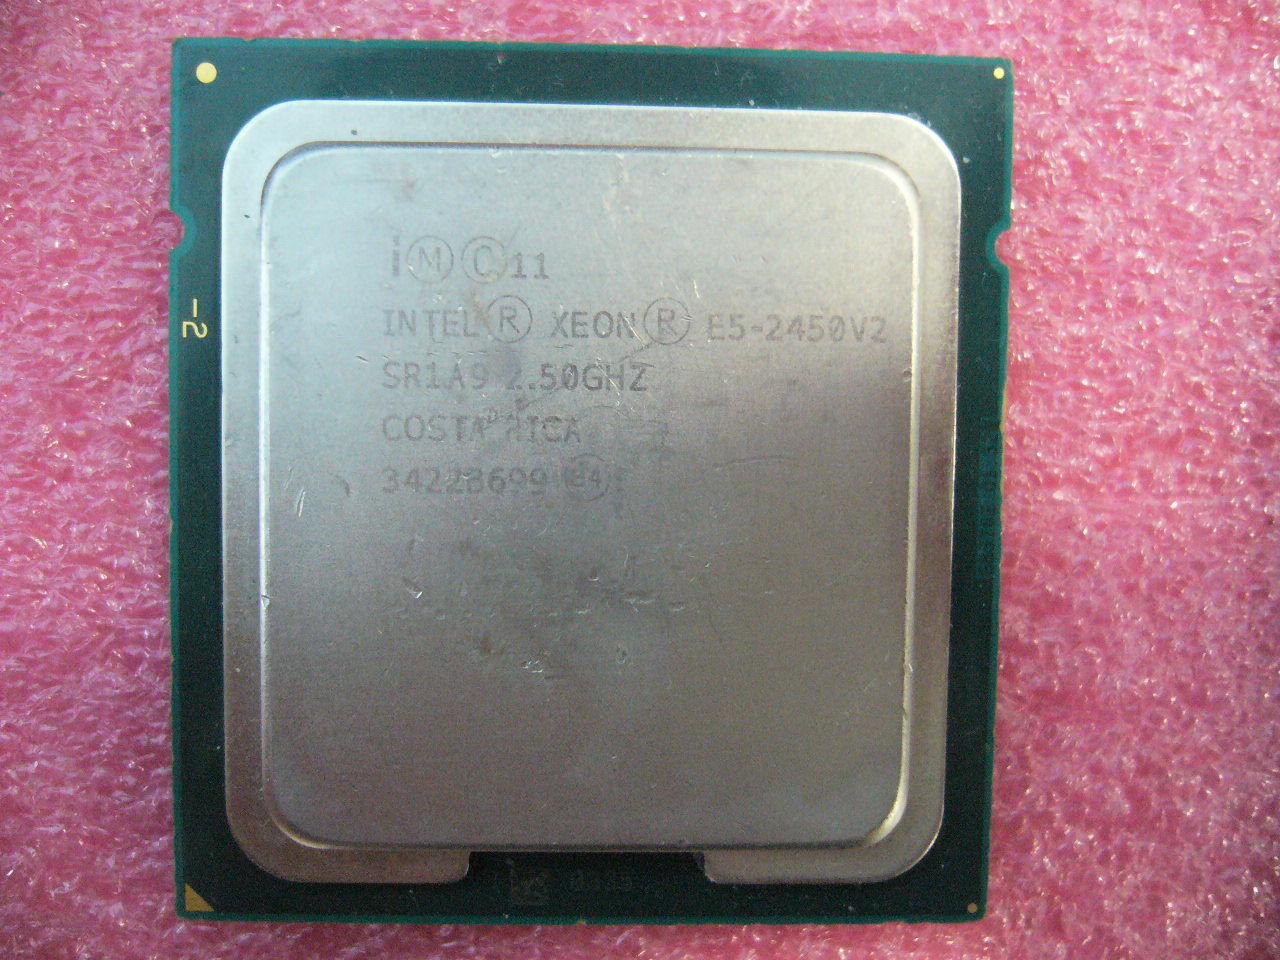 QTY 1x Intel CPU E5-2450 V2 8-Cores 2.5Ghz LGA1356 SR1A9 - Click Image to Close